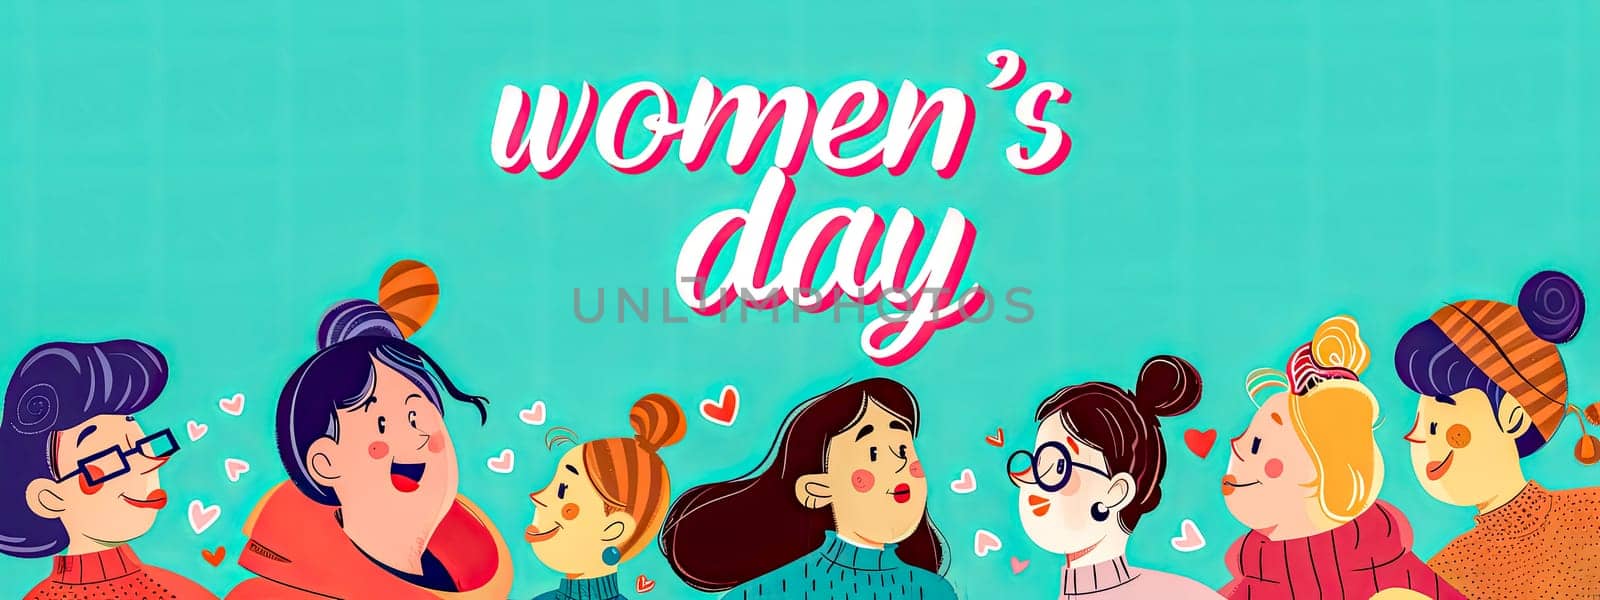 Colorful illustration of diverse women celebrating international women's day